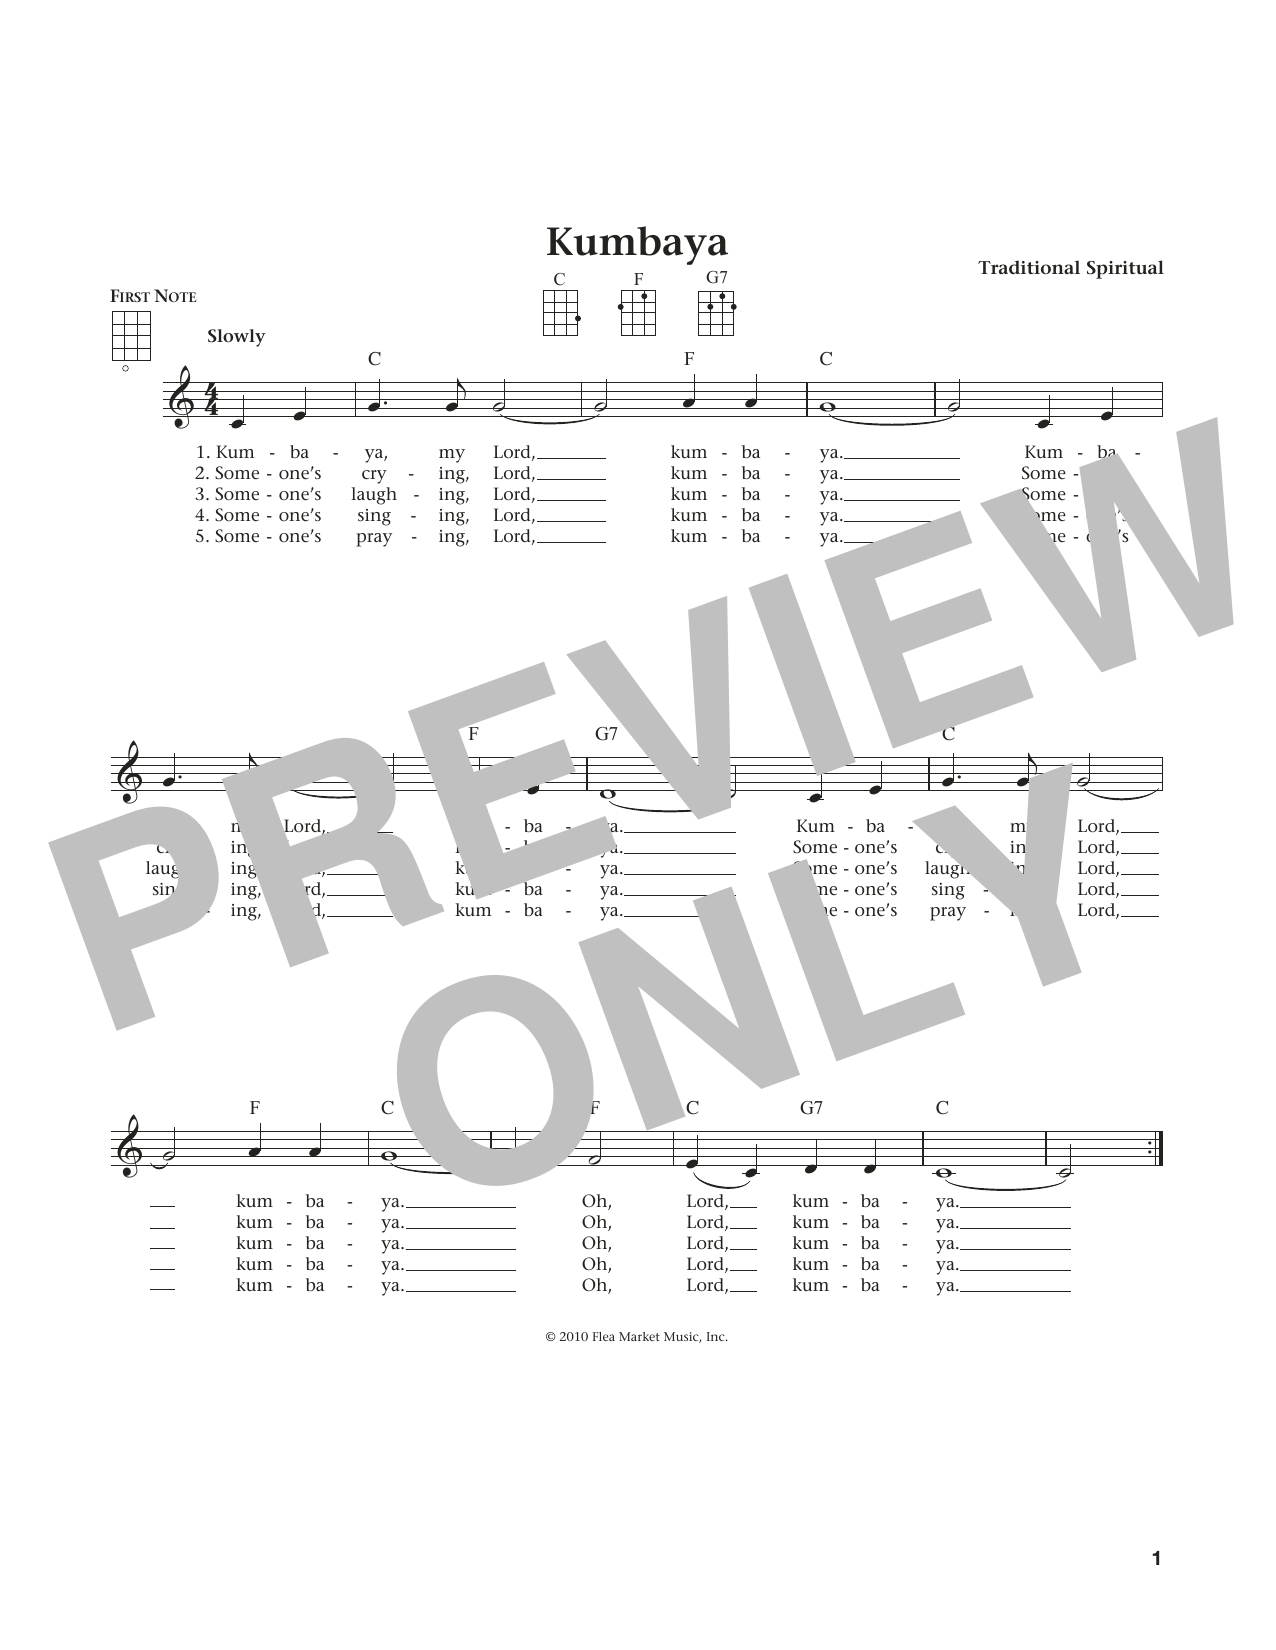 Traditional Spiritual Kum Ba Yah (from The Daily Ukulele) (arr. Liz and Jim Beloff) Sheet Music Notes & Chords for Ukulele - Download or Print PDF